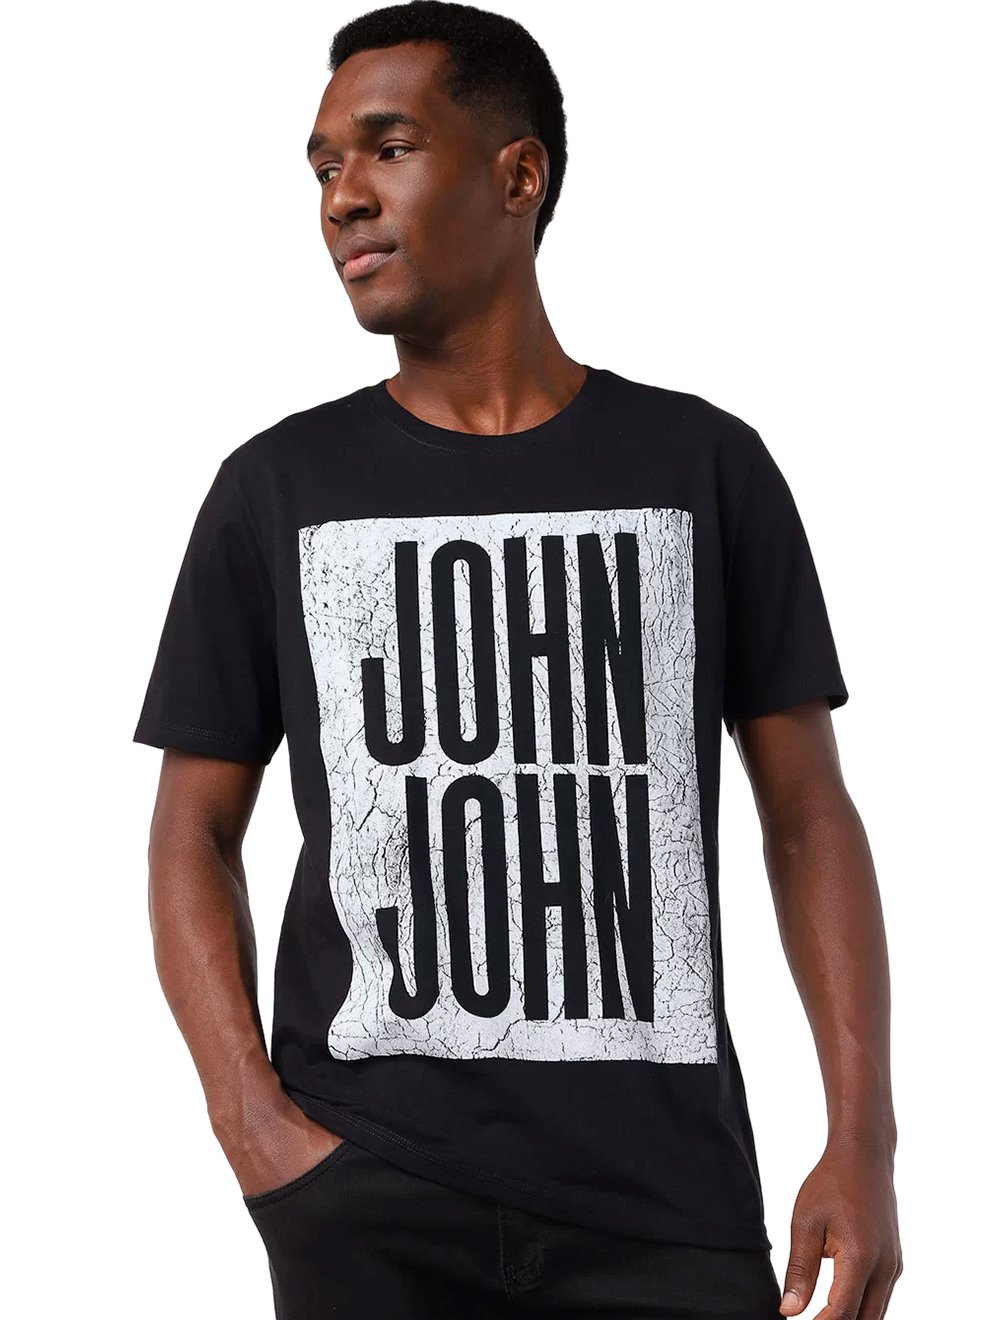 Camiseta John John Básica com Logo Masculina - Rossi Classic